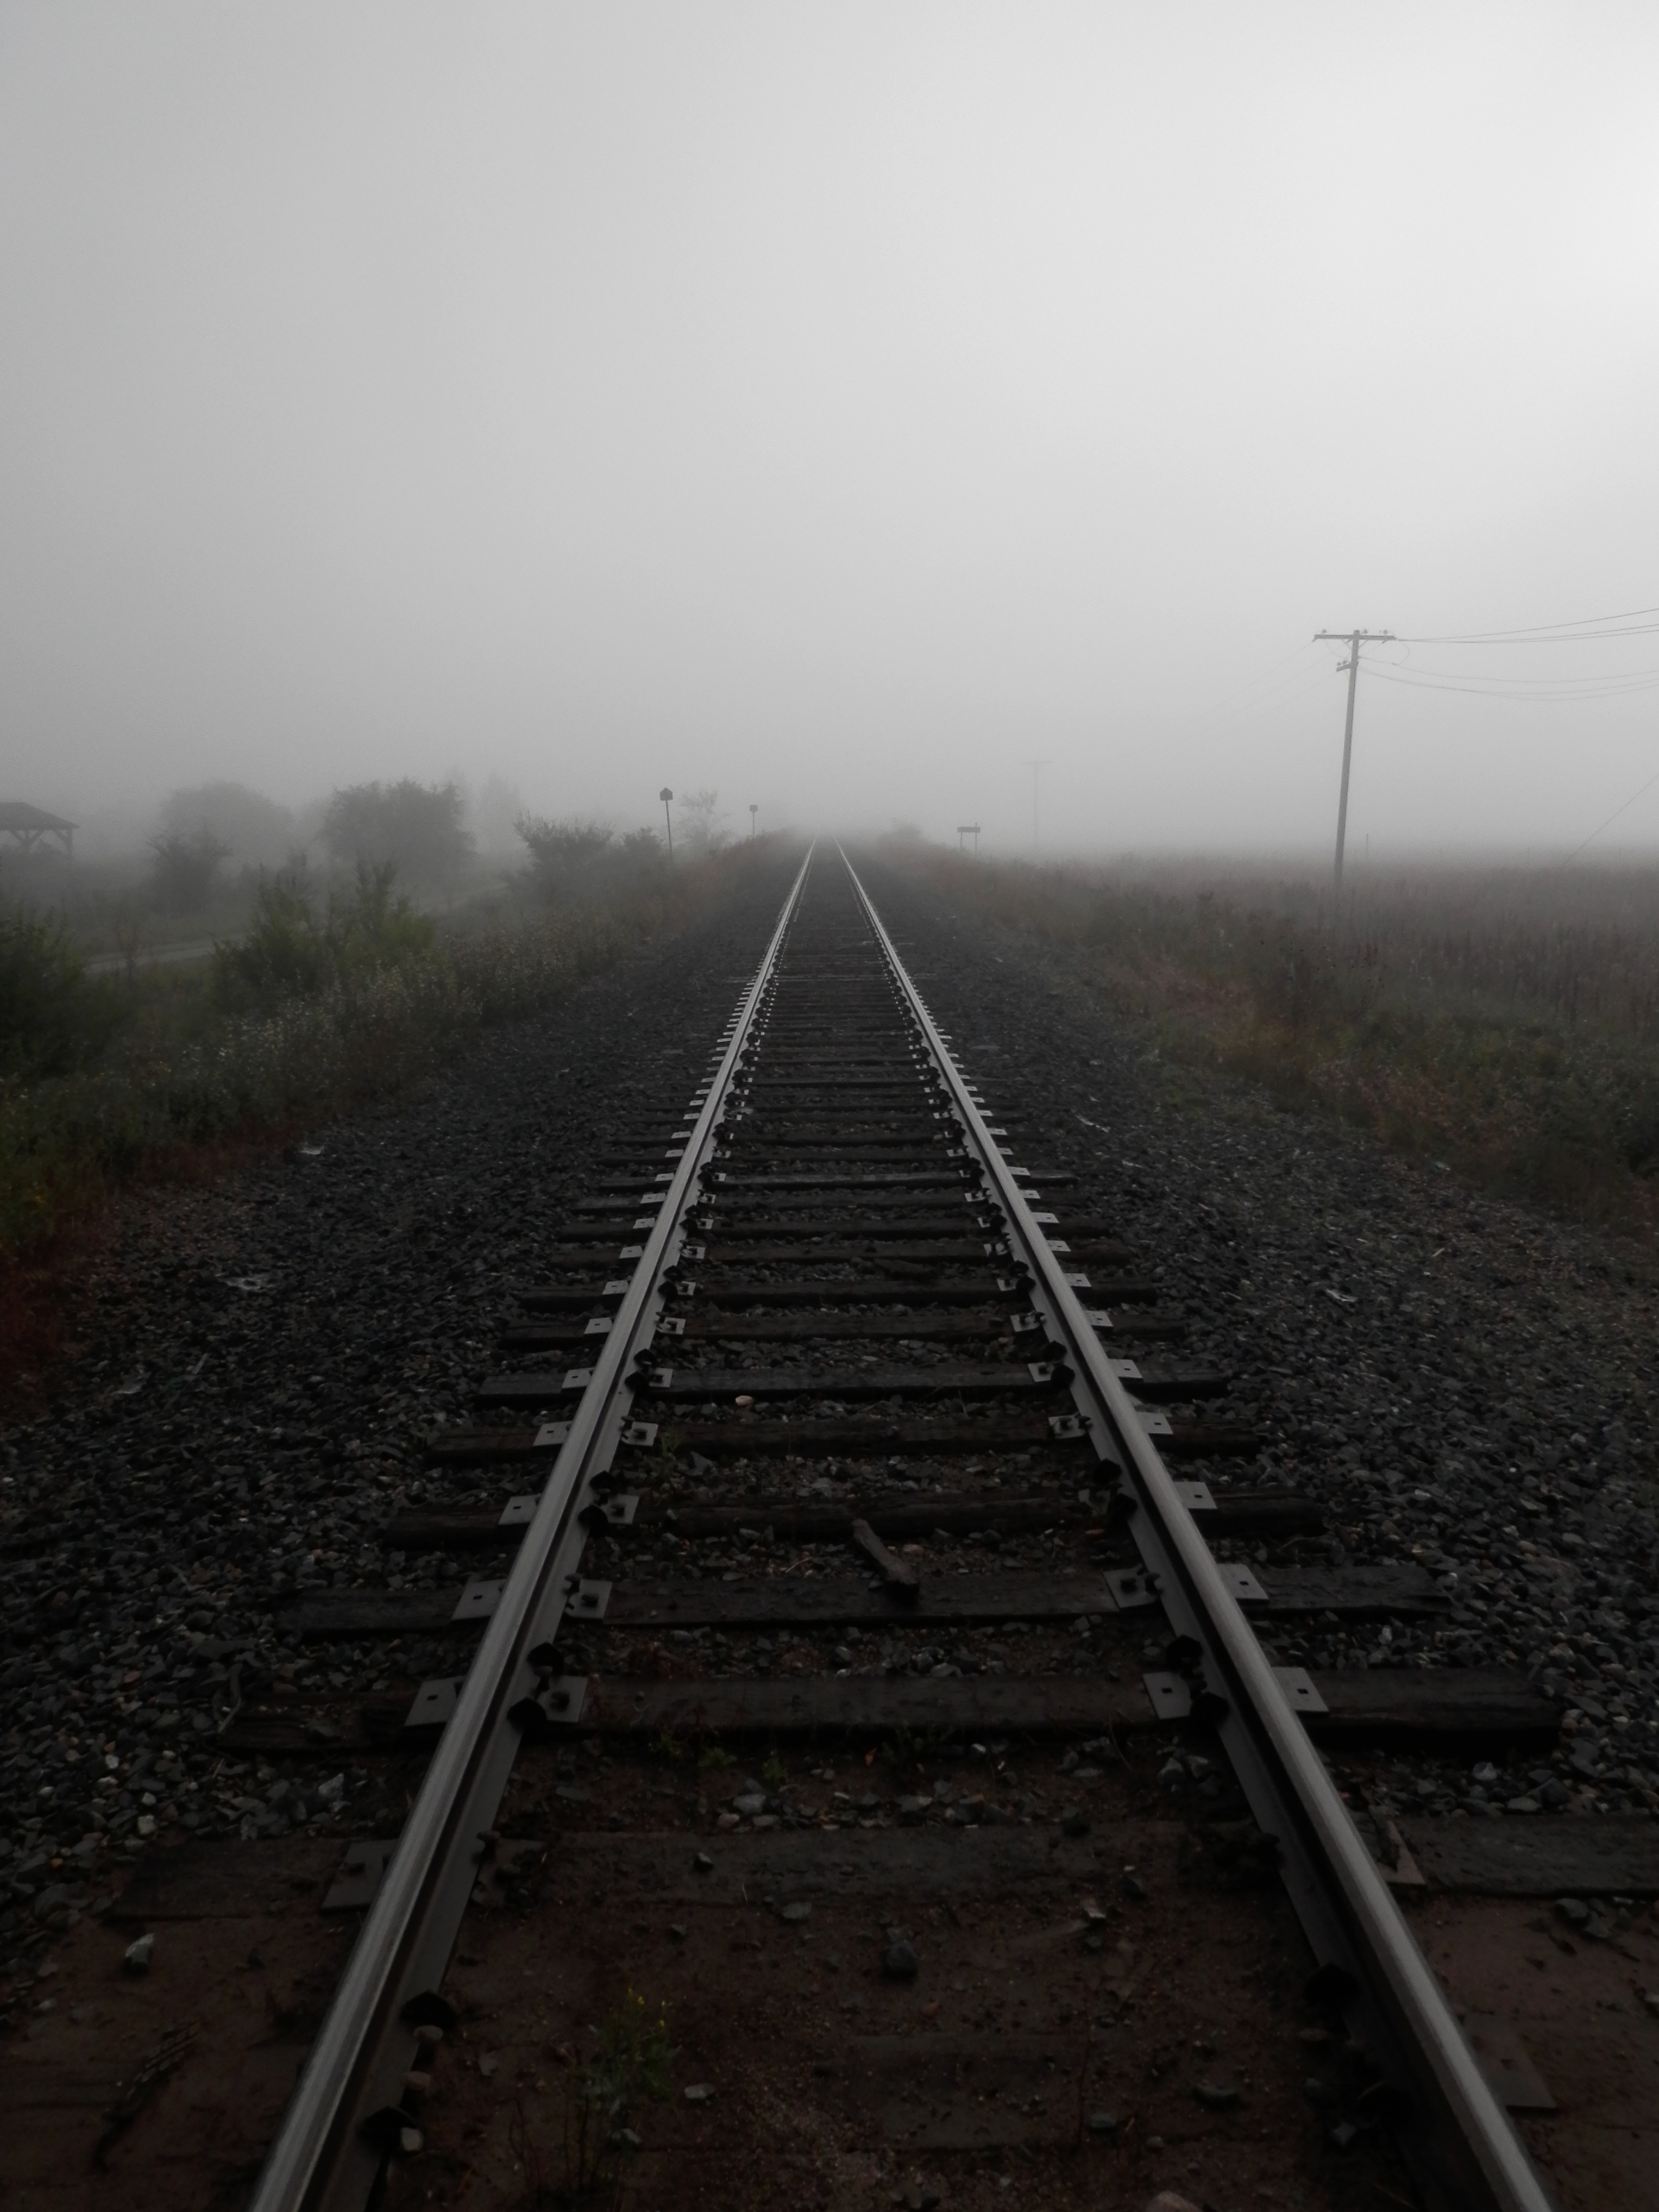 File:Train Tracks in the Fog - Saskatoon 01.jpg - Wikimedia Commons